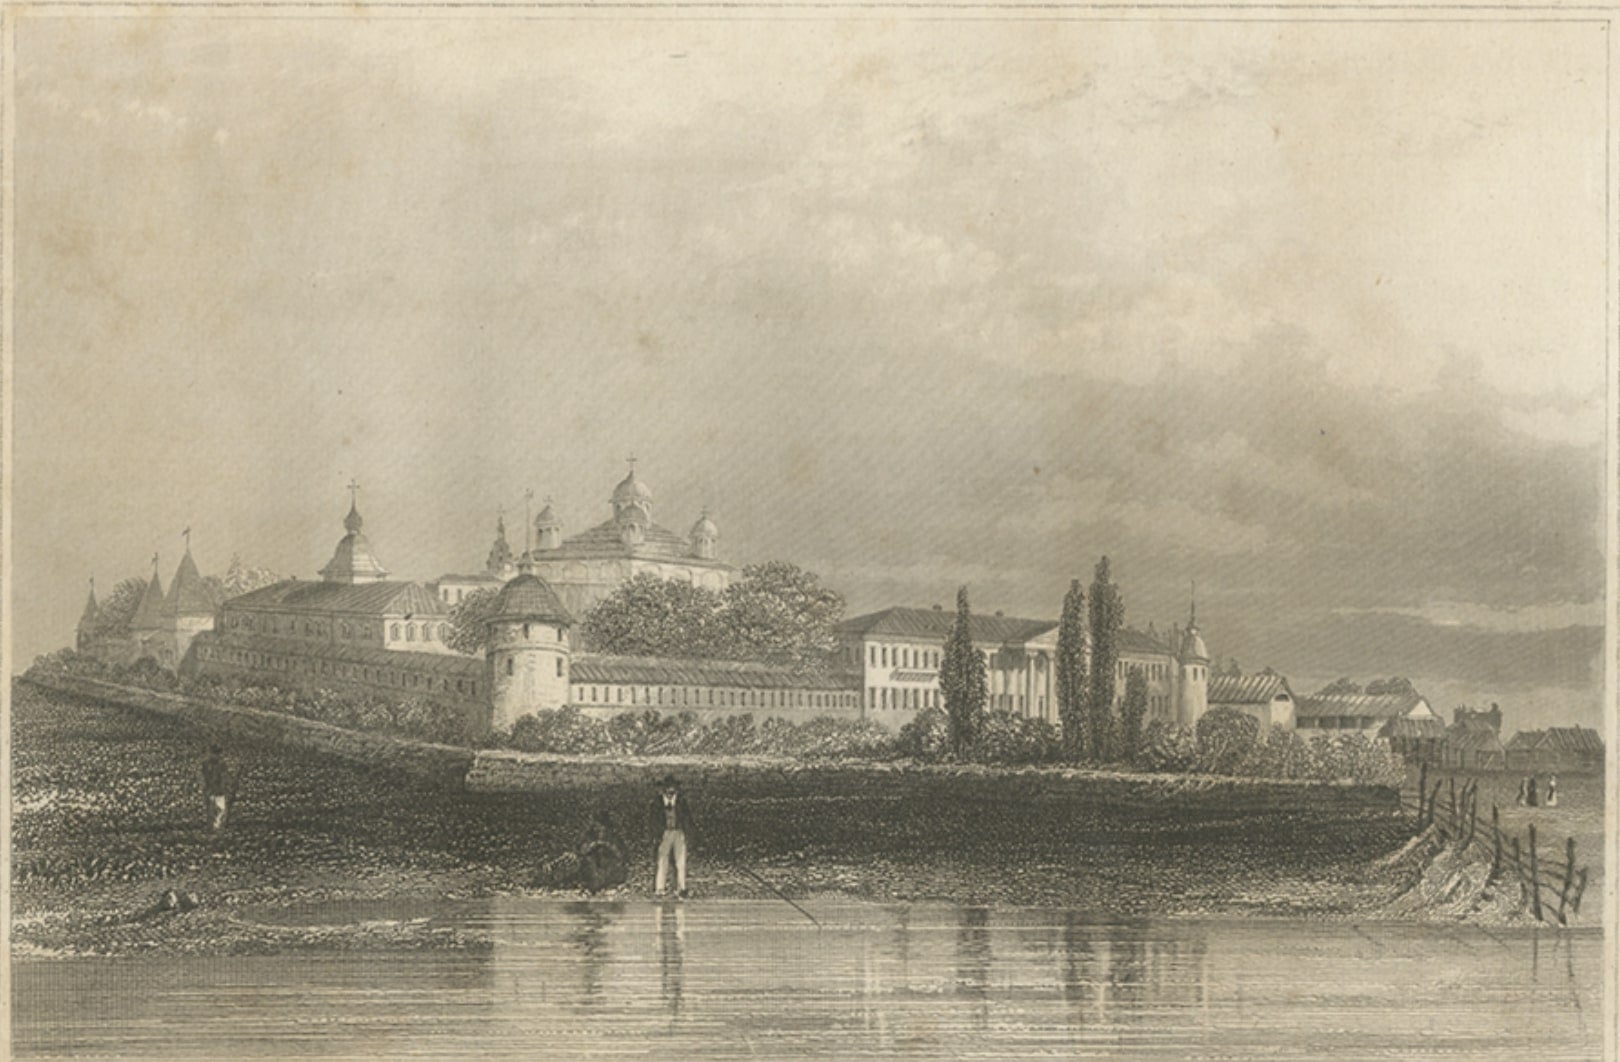 Antique Print of the Ipatievsky Monastery in Russia, 1841